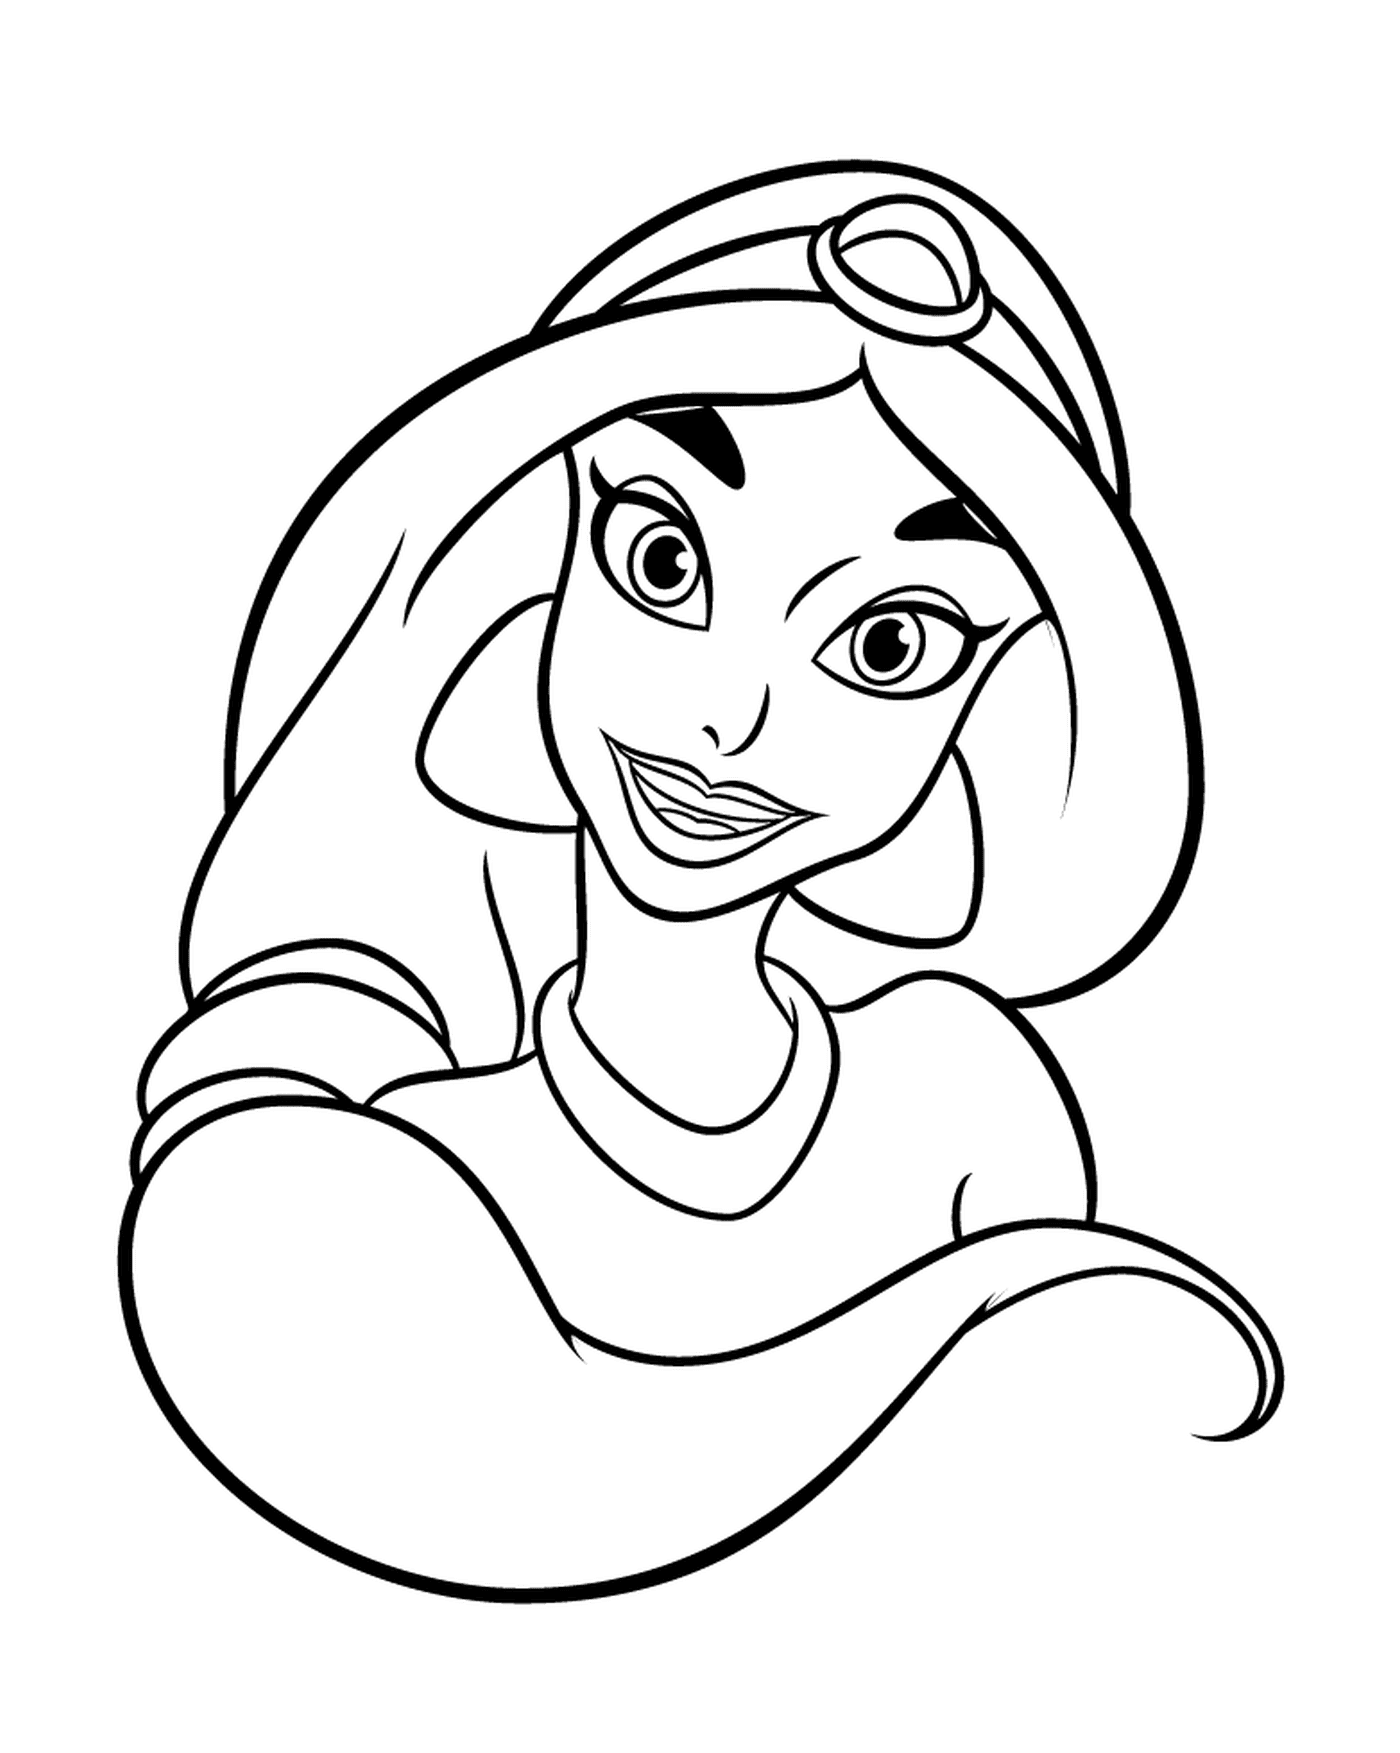  Jasmine da Disney Princesas 